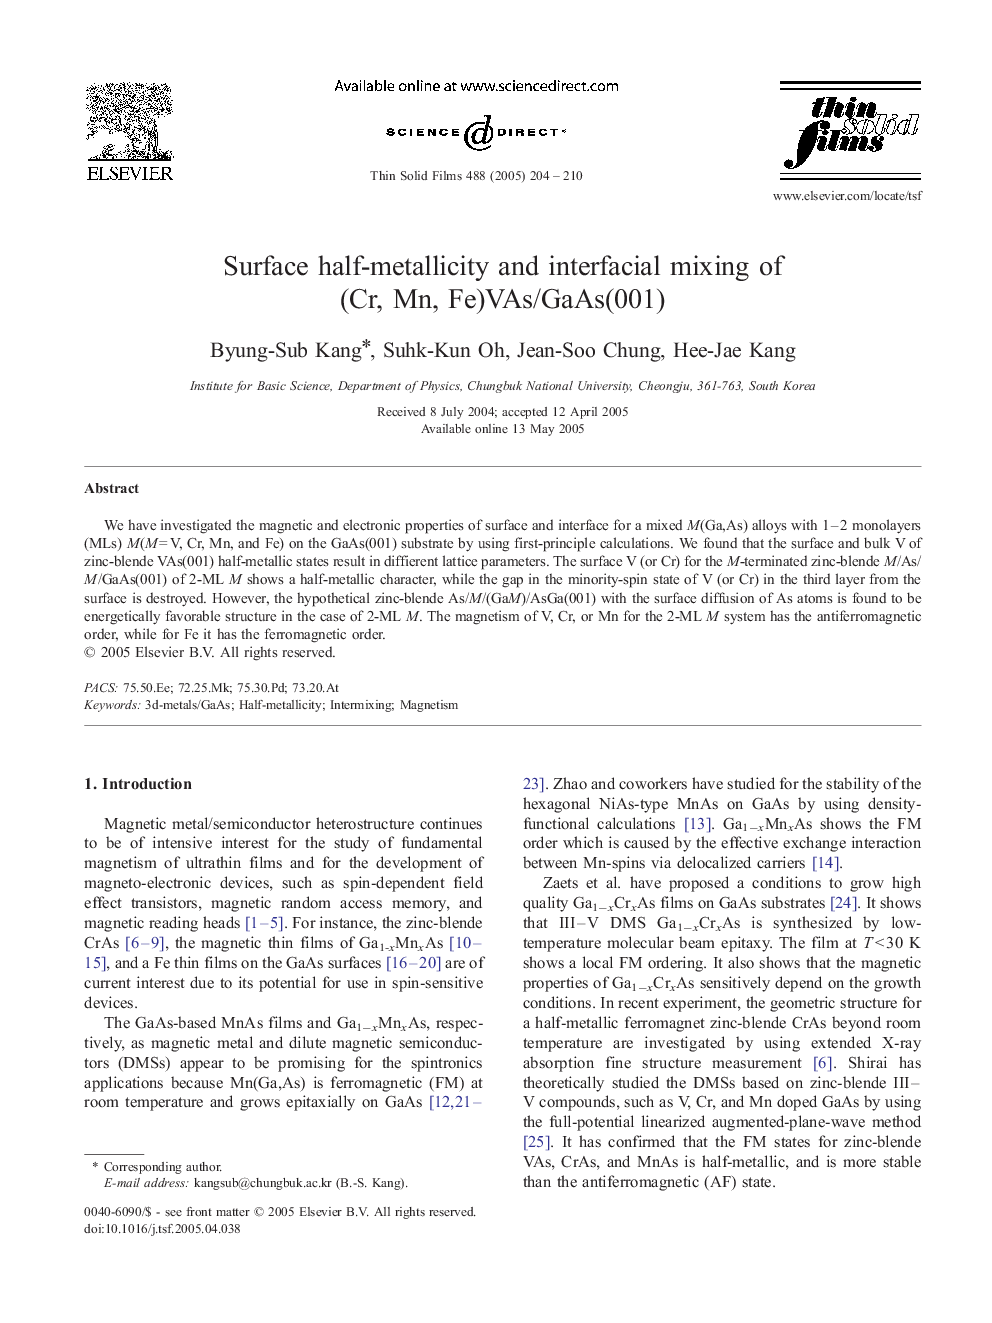 Surface half-metallicity and interfacial mixing of (Cr, Mn, Fe)VAs/GaAs(001)